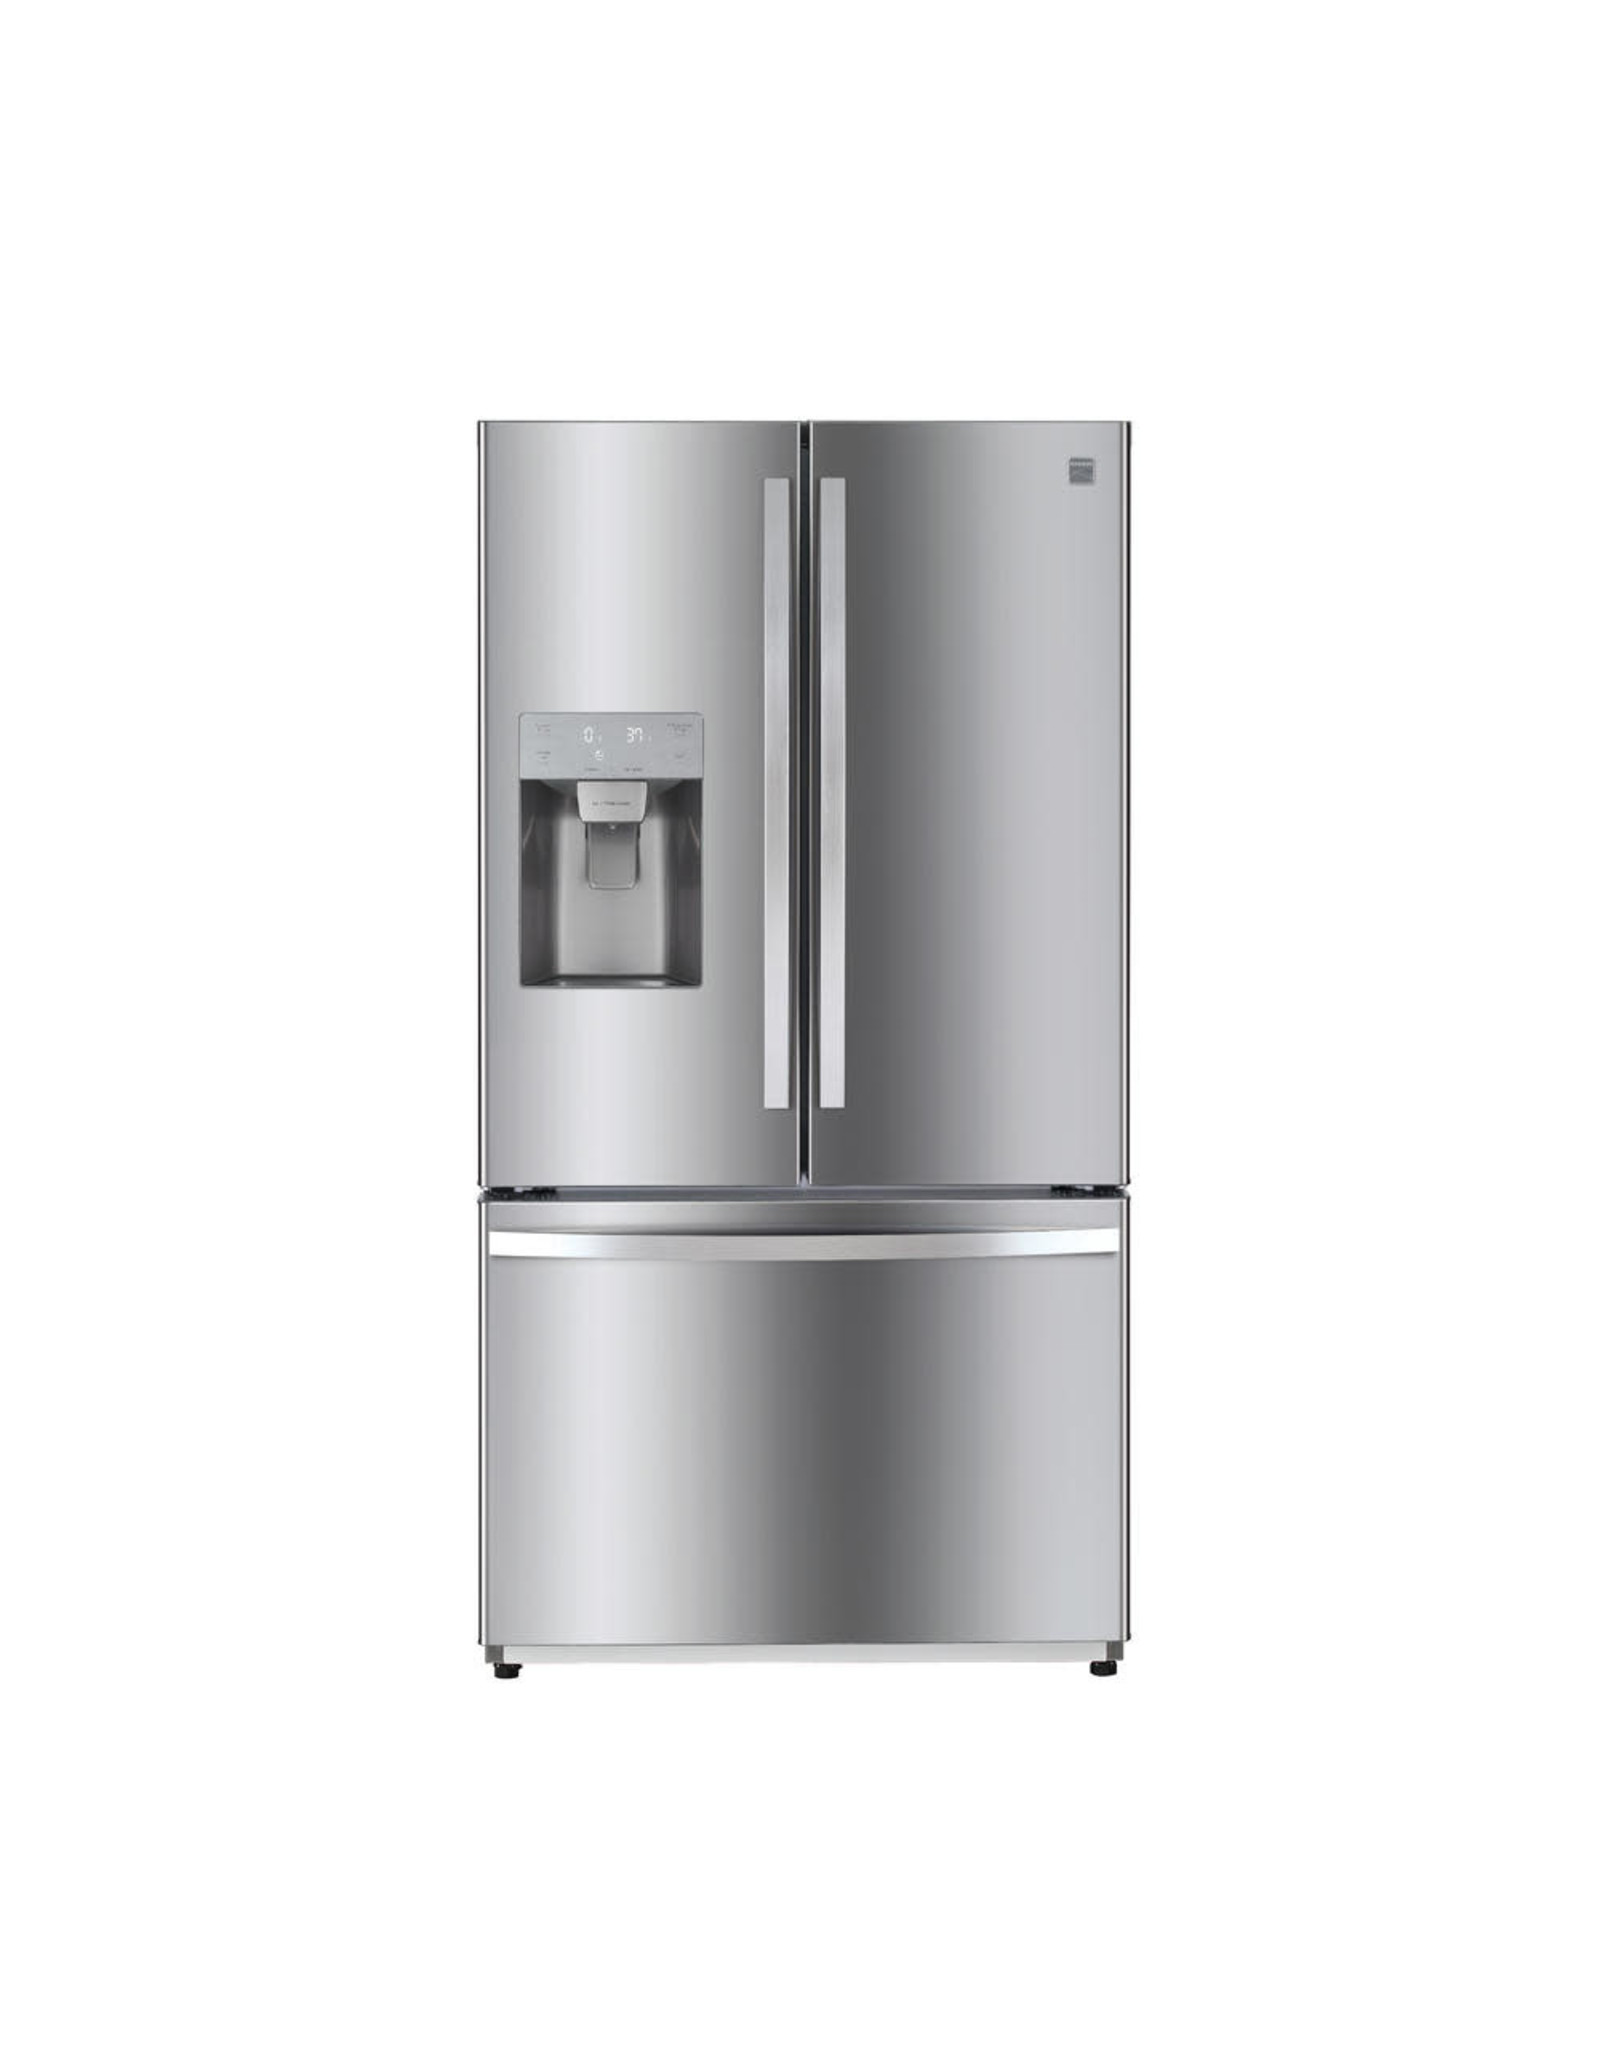 Kenmore 75035 25.5 cu. ft. French Door Refrigerator – Fingerprint Resistant Stainless Steel